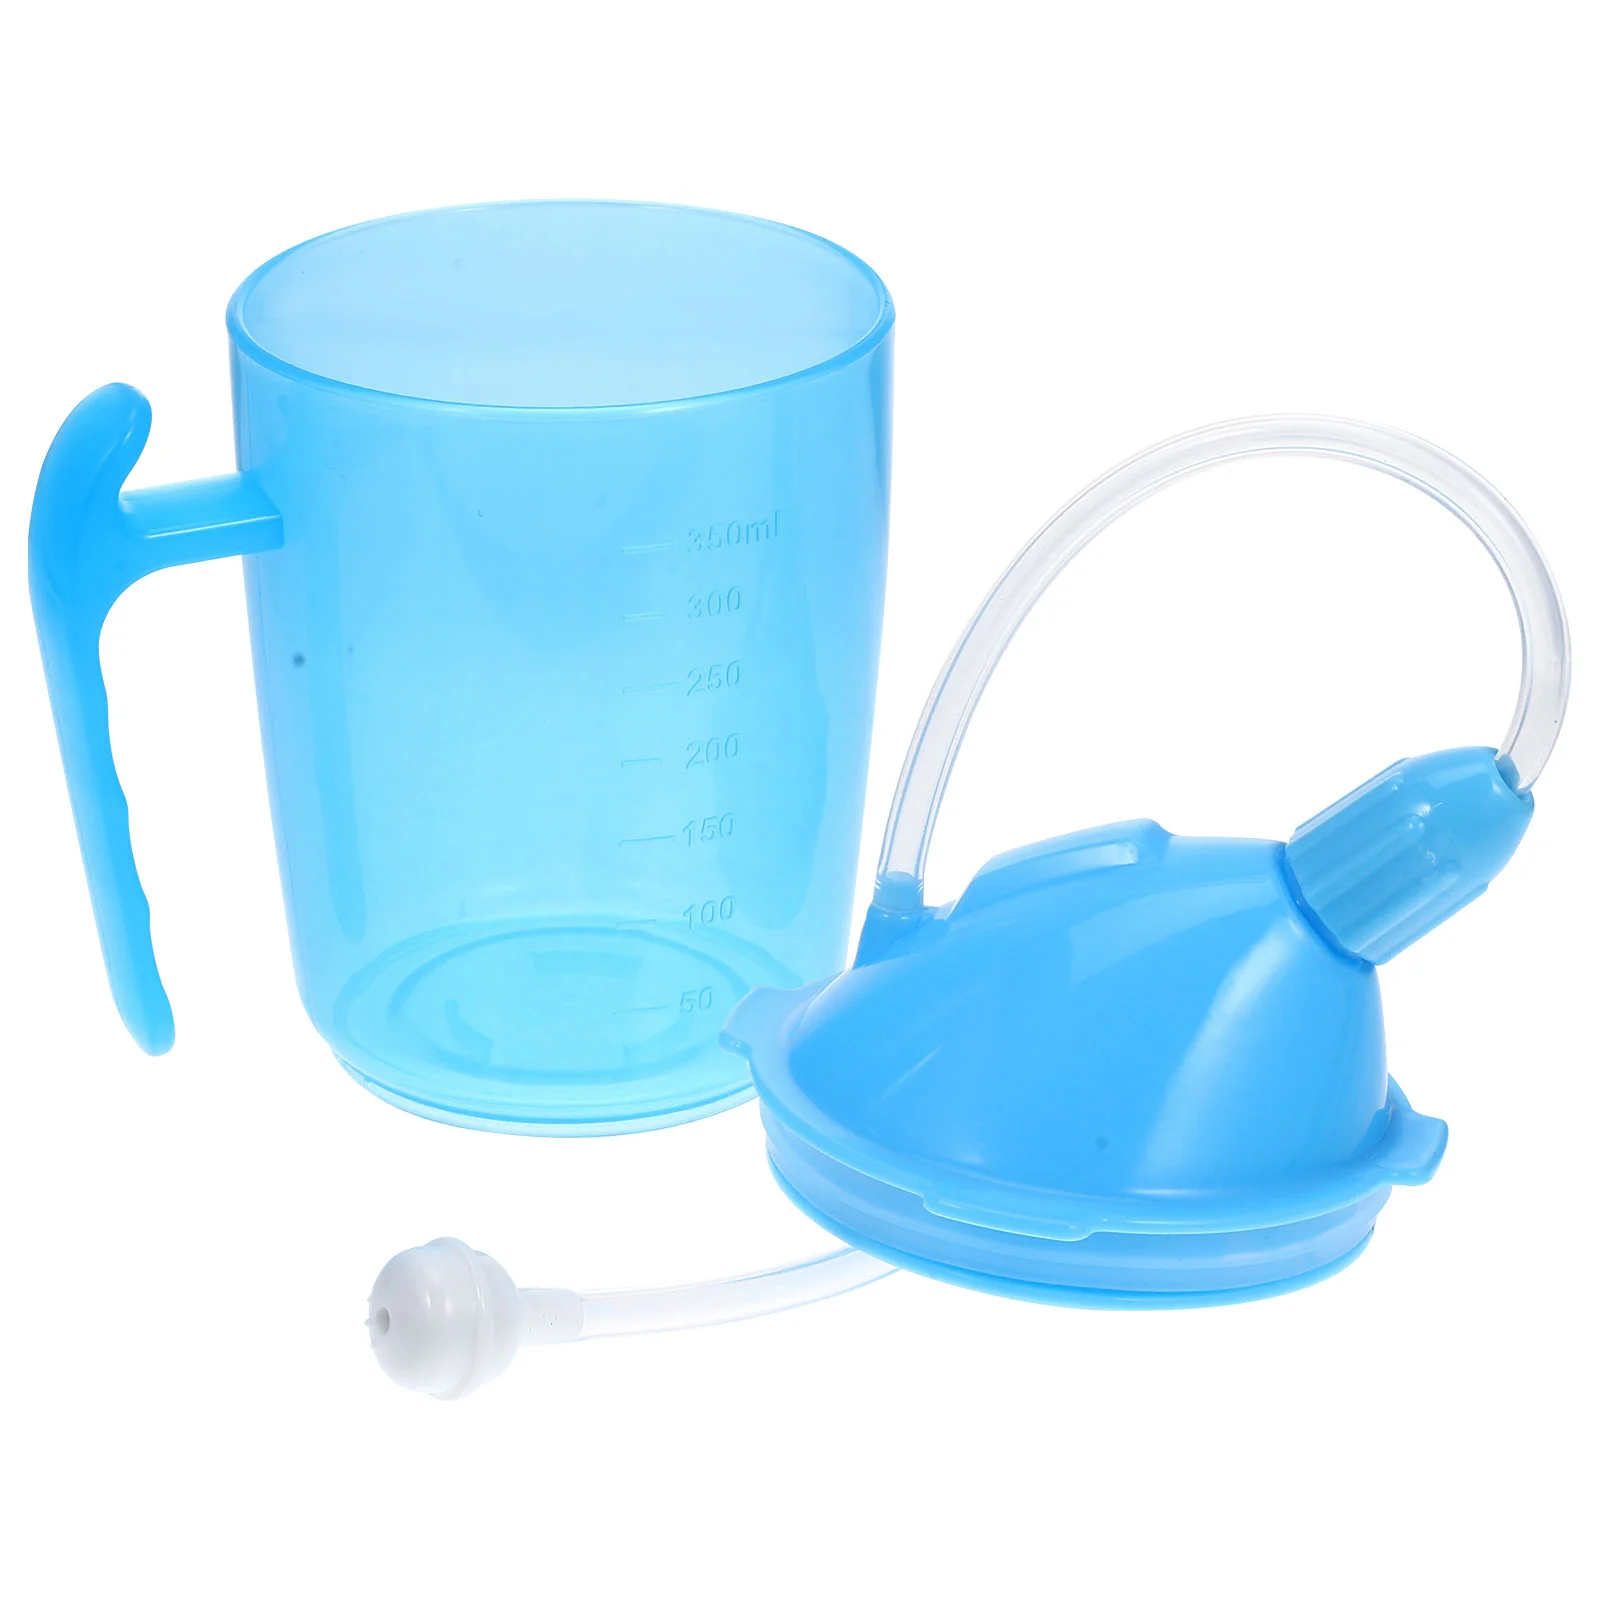 

Nursing Cup Choking-proof Drinking Elderly Water Liquid Feeding Diet for Glasses